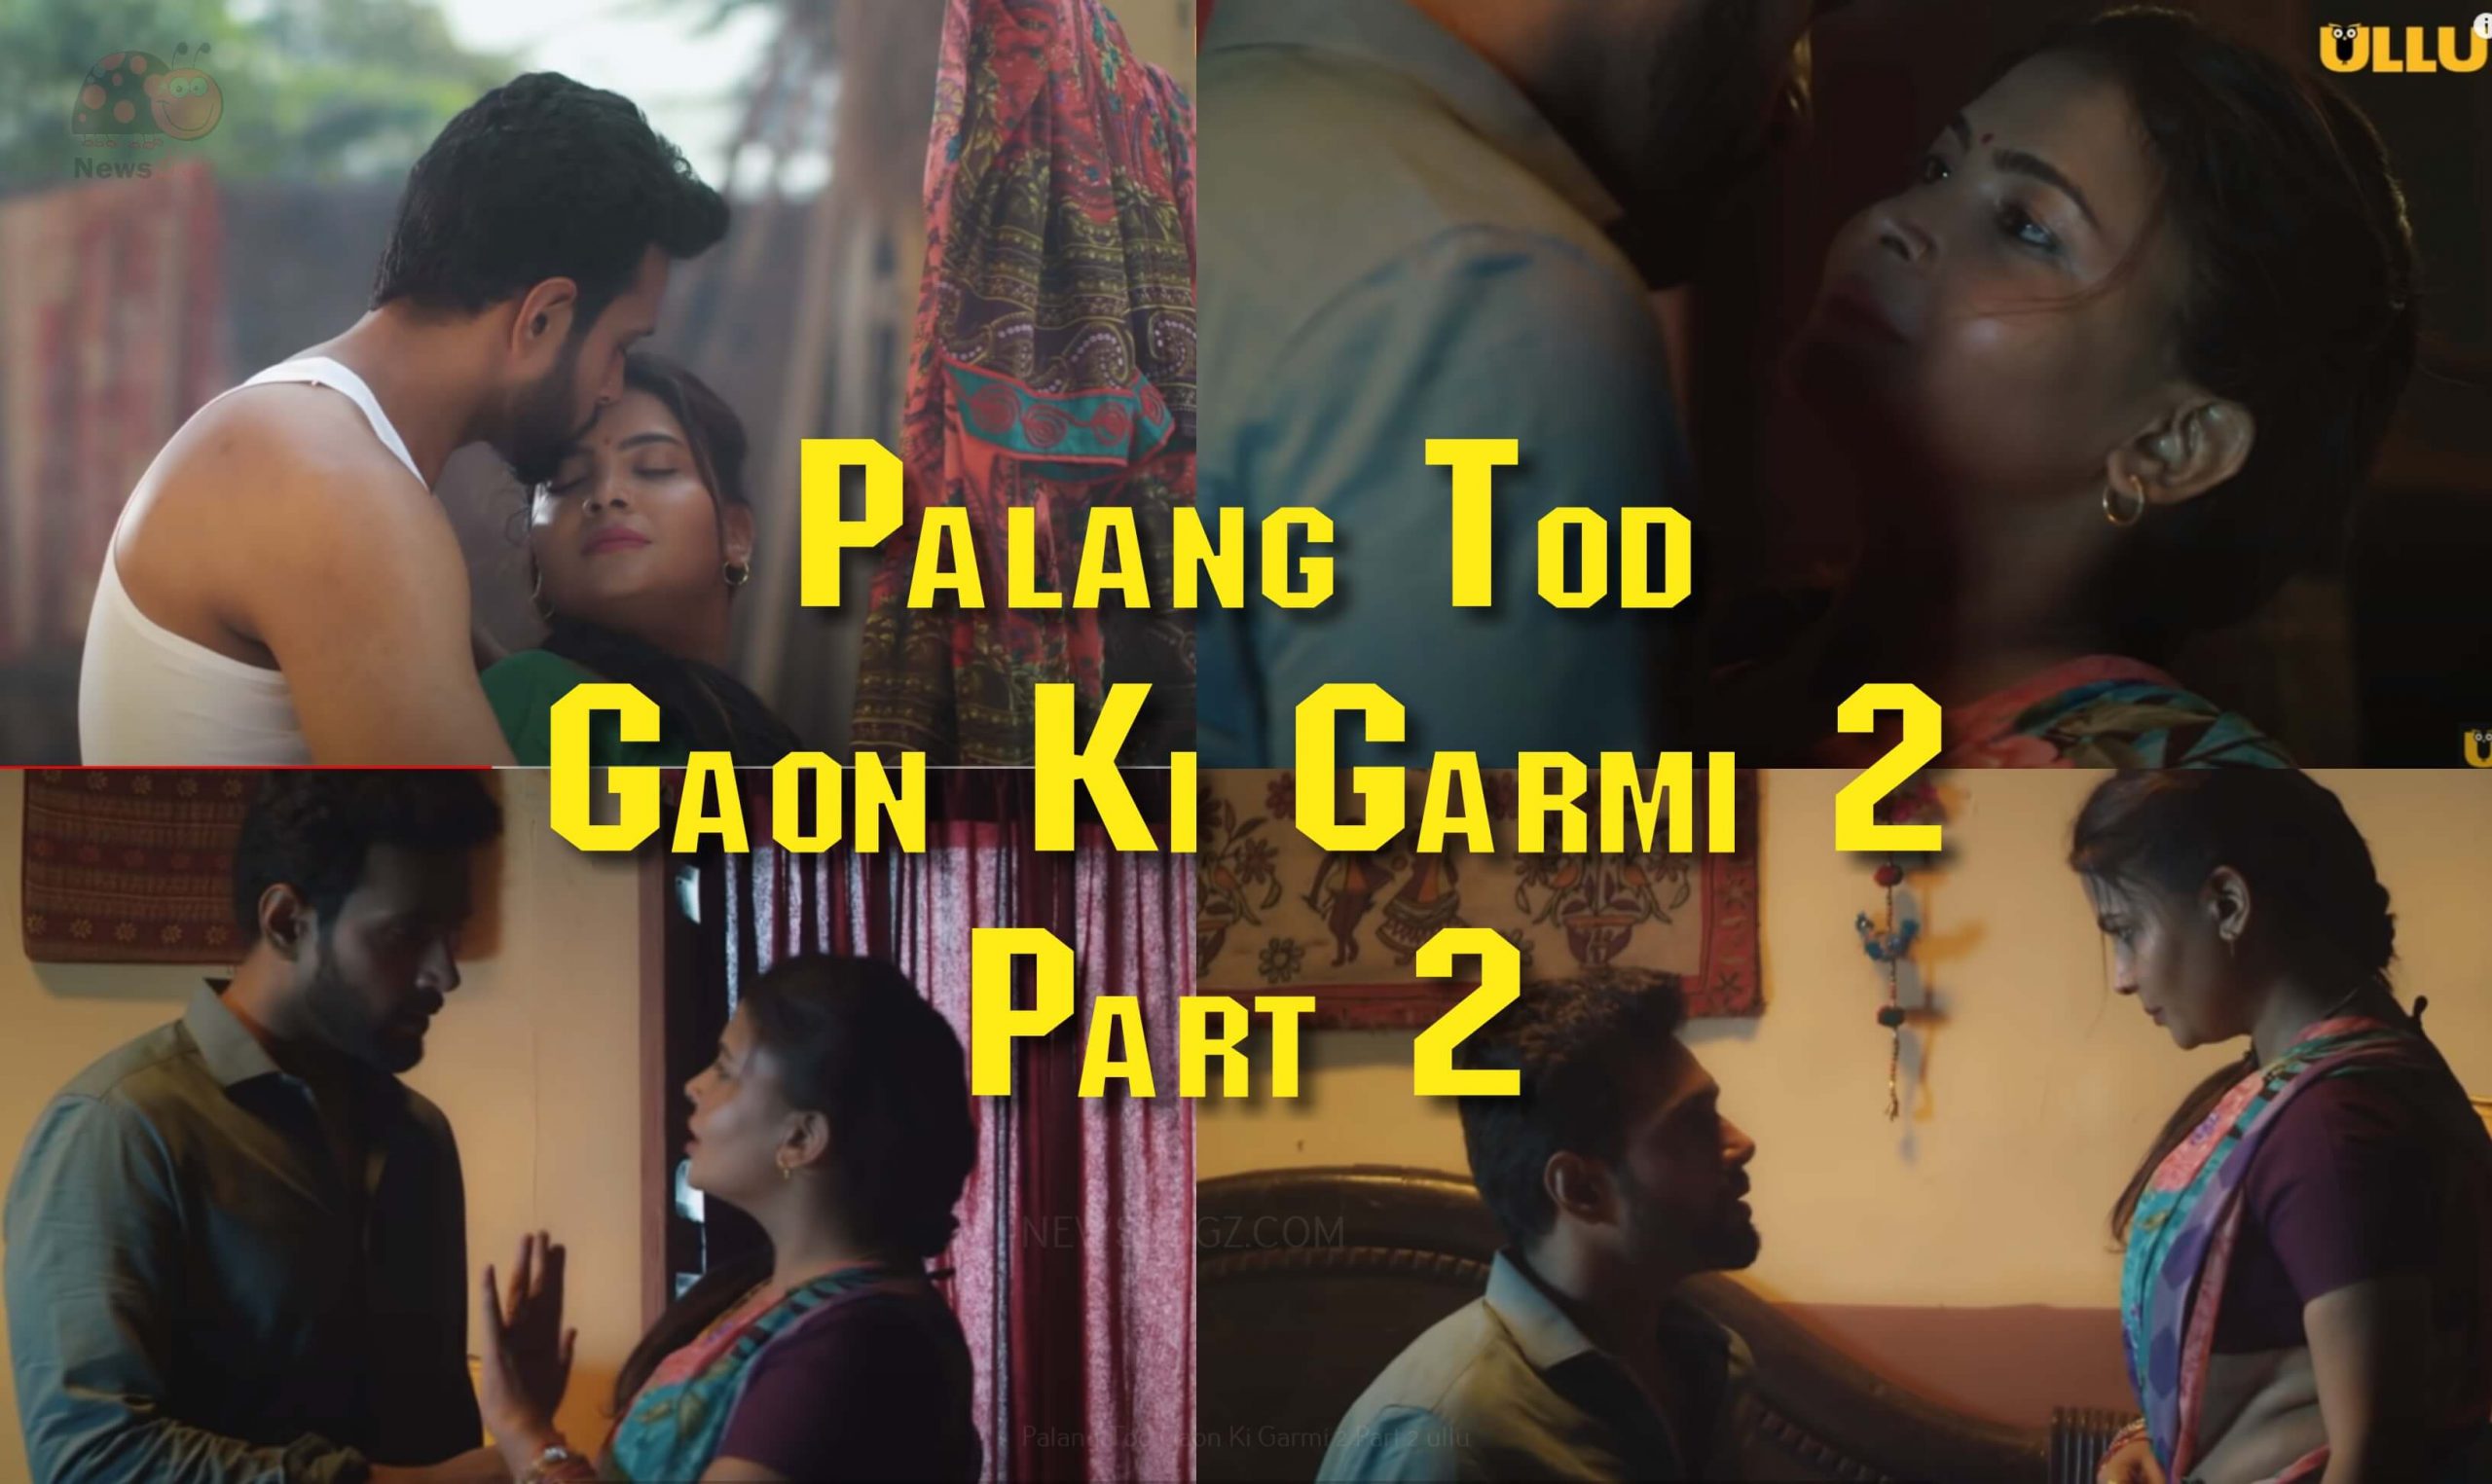 Palang Tod Gaon Ki Garmi 2 Part 2 Web Series (2022) Ullu: Cast, Watch Online